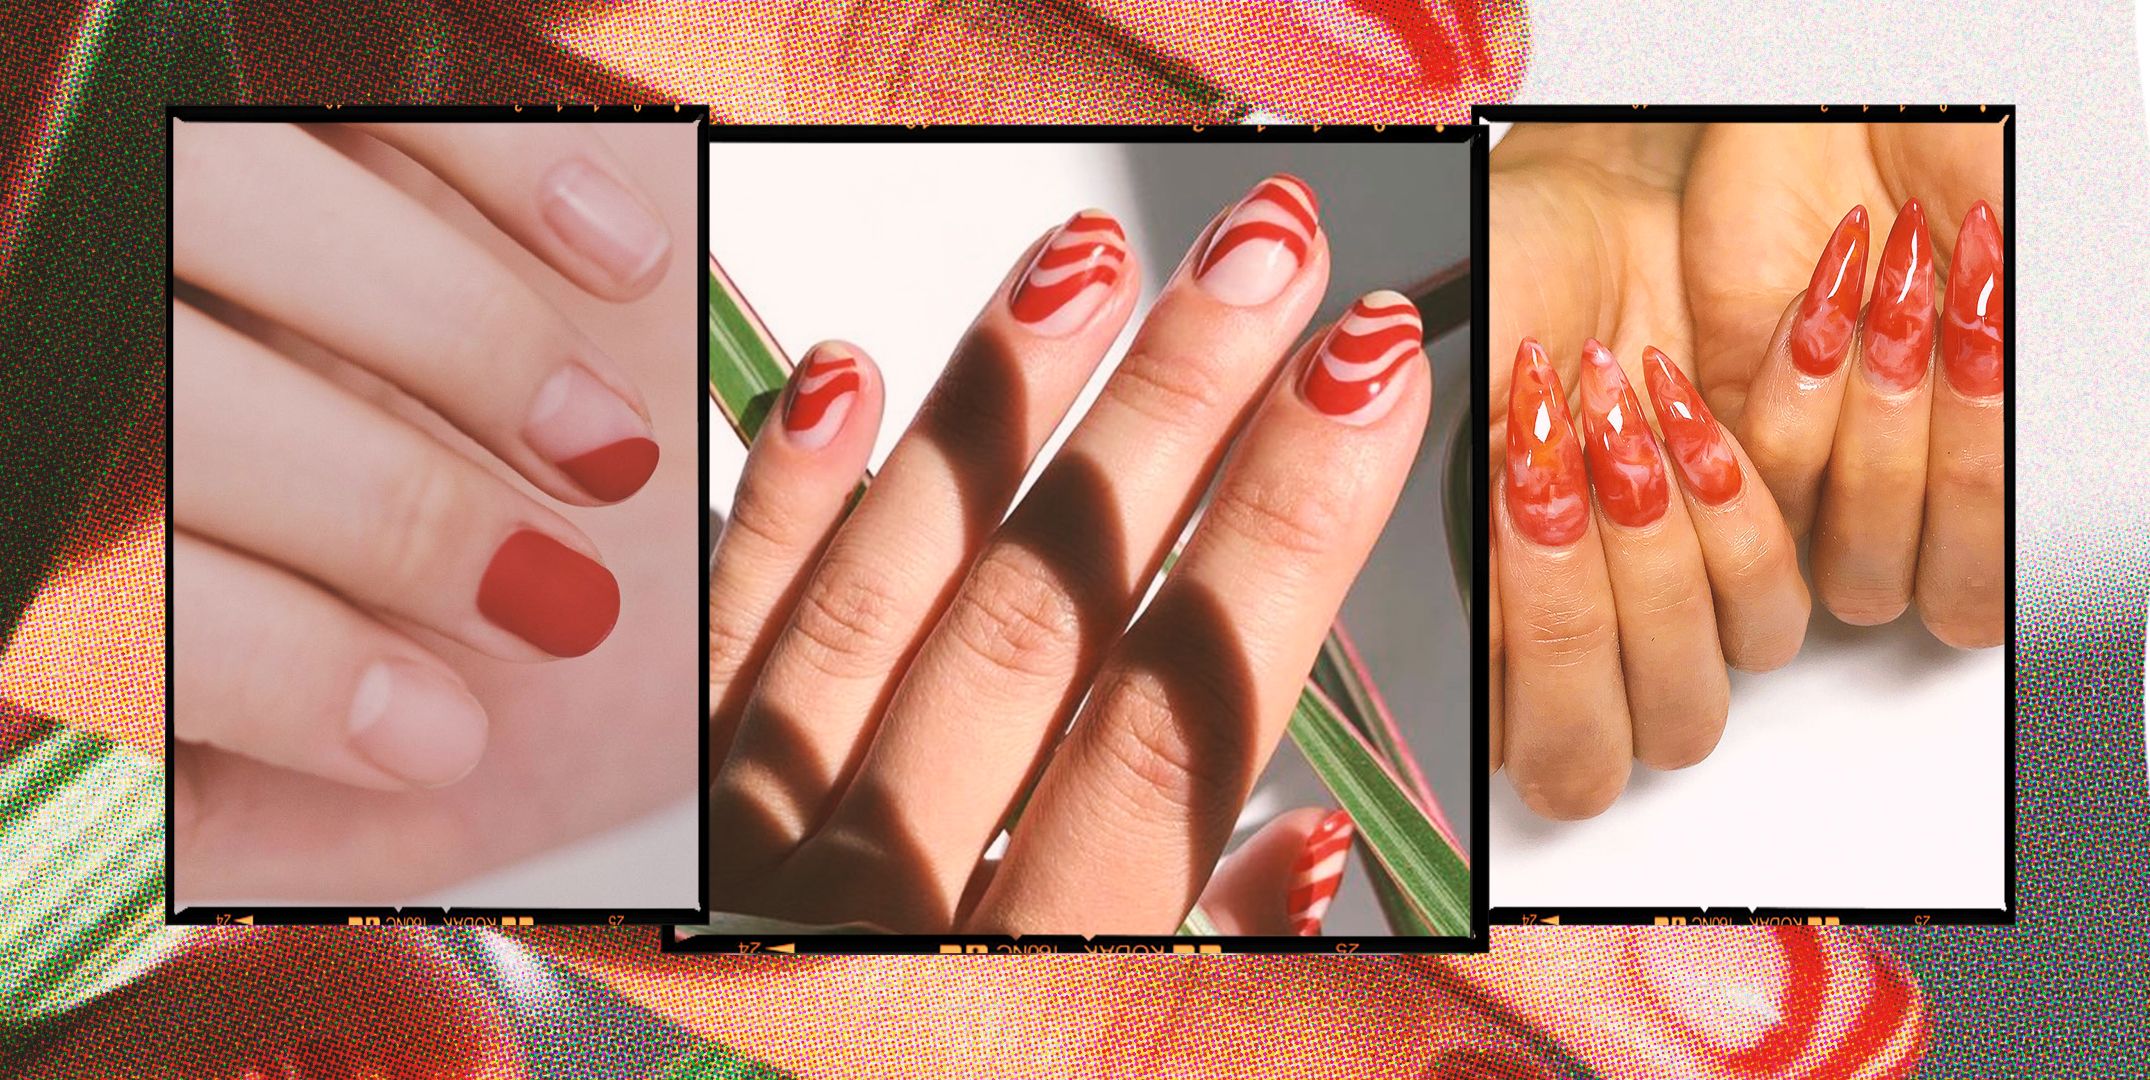 Petals and polish: red nails with floral design : r/NailArt